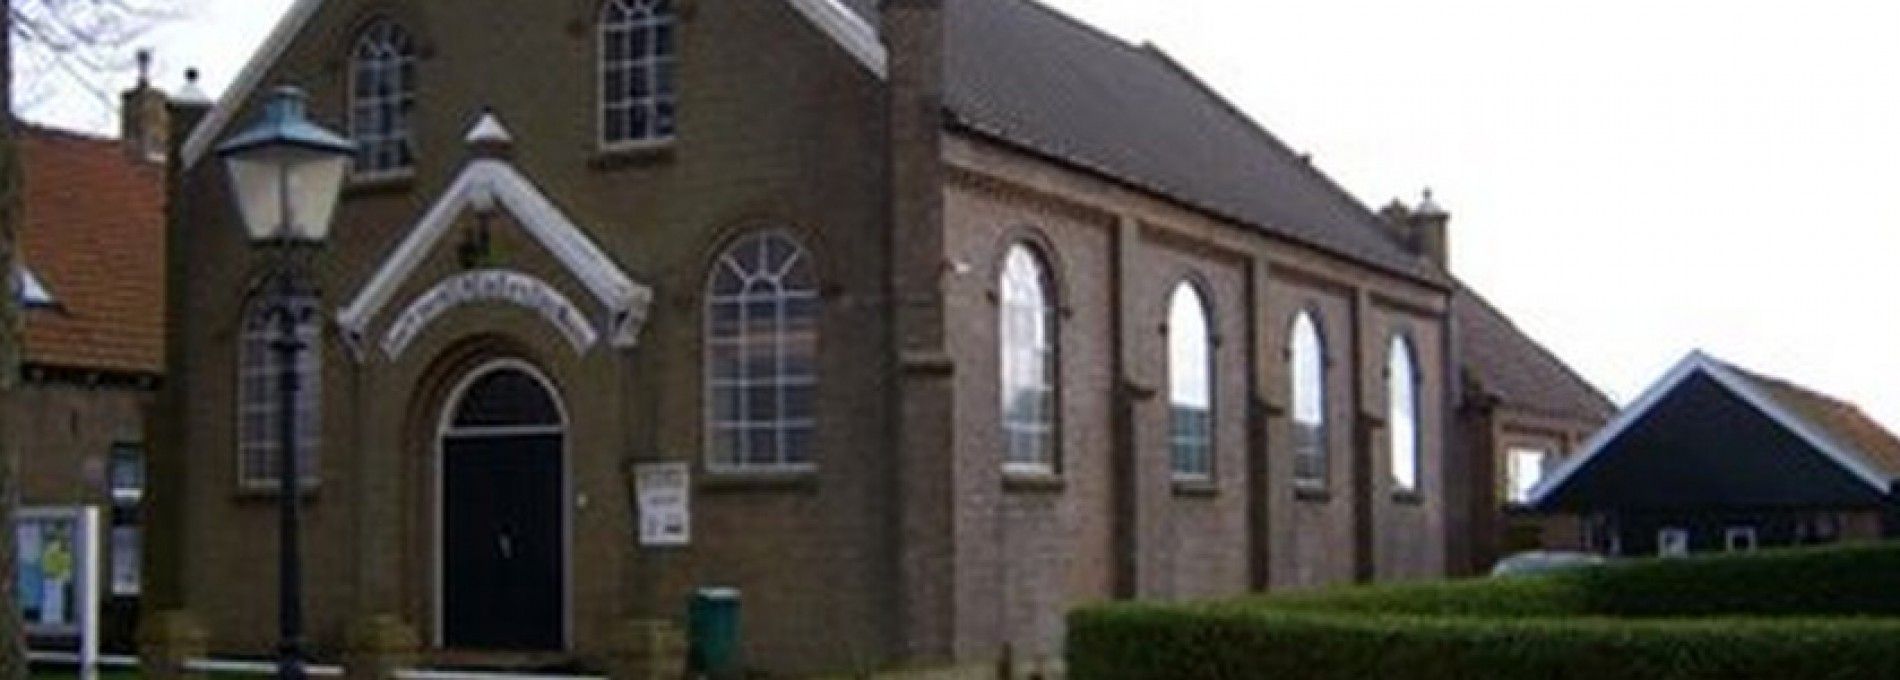 Federation Mennonite-Reformed Hollum, Westerlaankerk on Ameland.